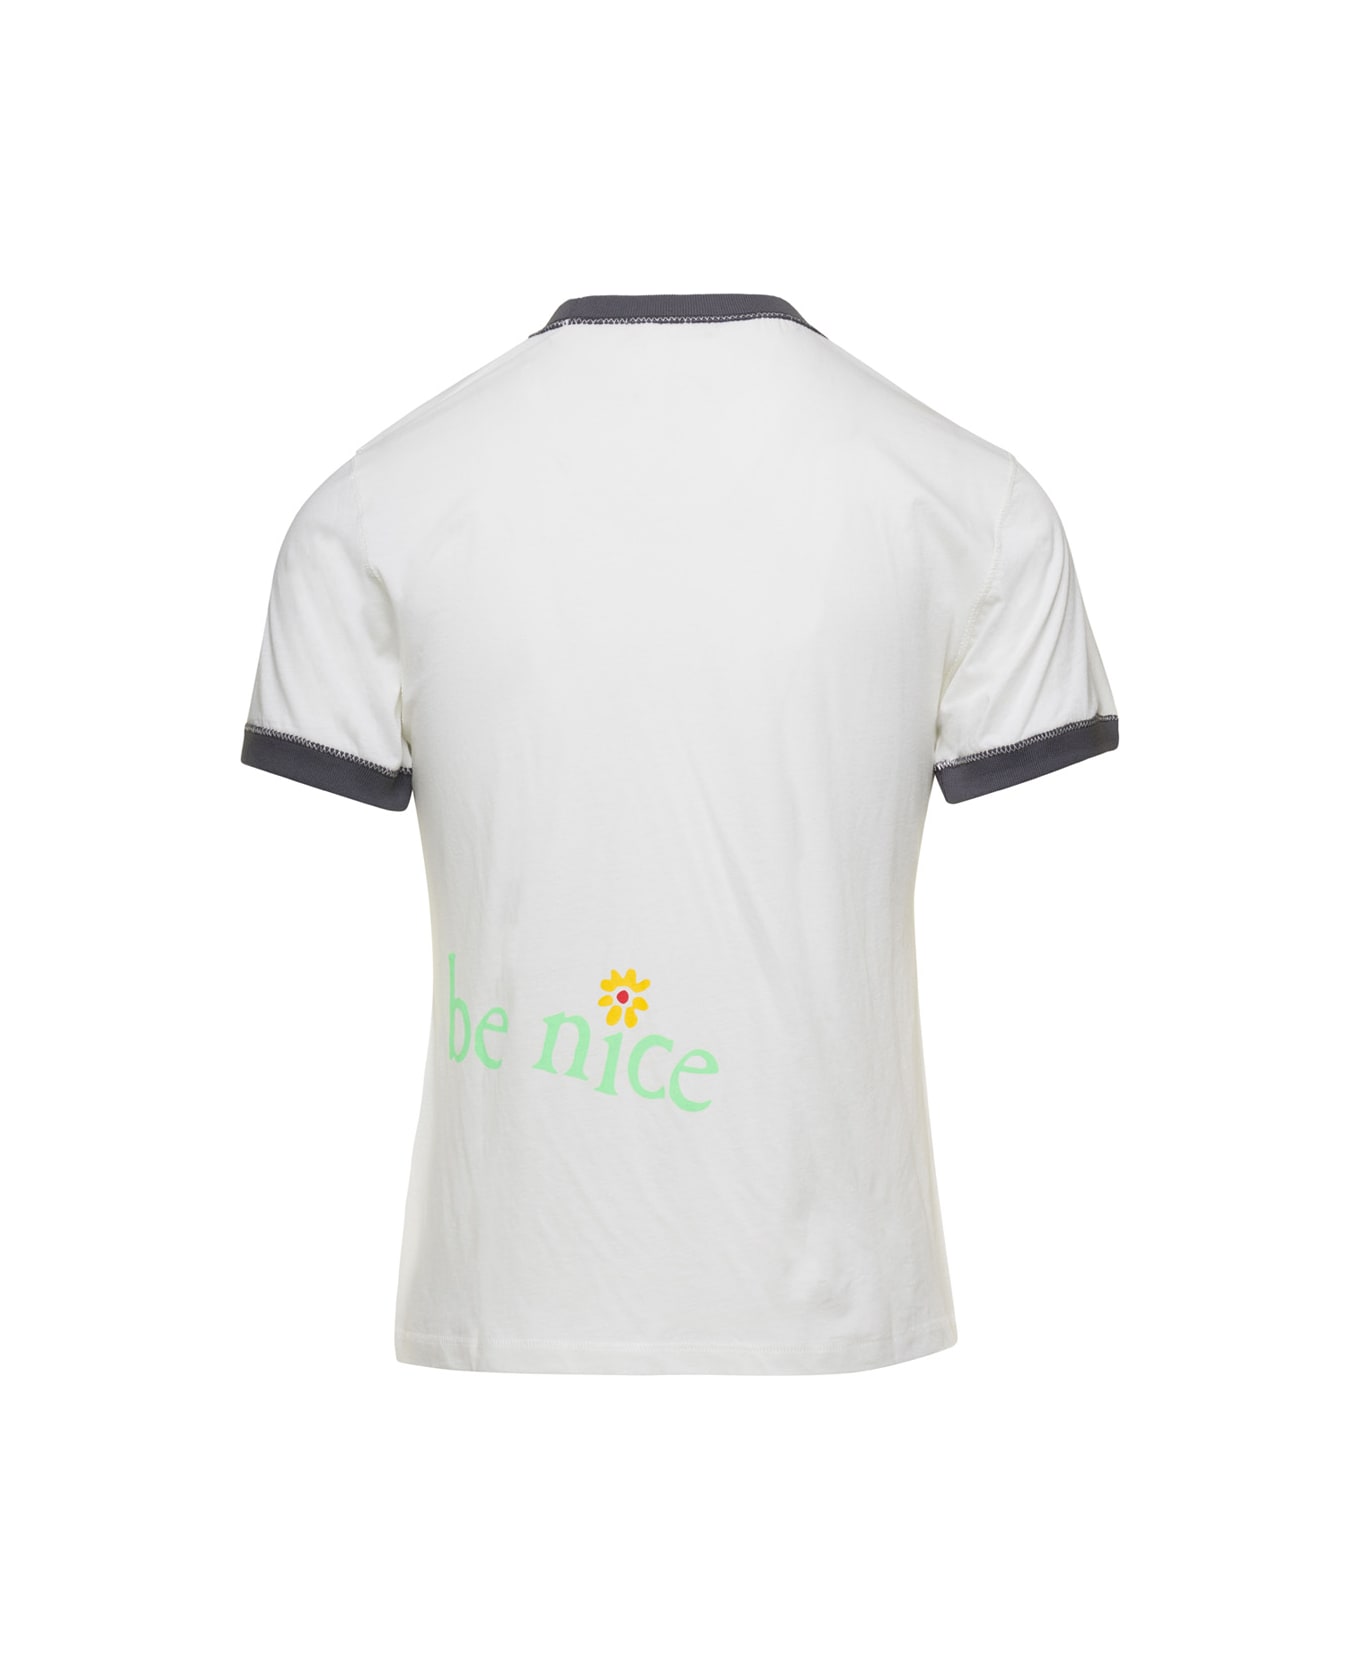 ERL White Crew Neck T-shirt In Cotton Man - White